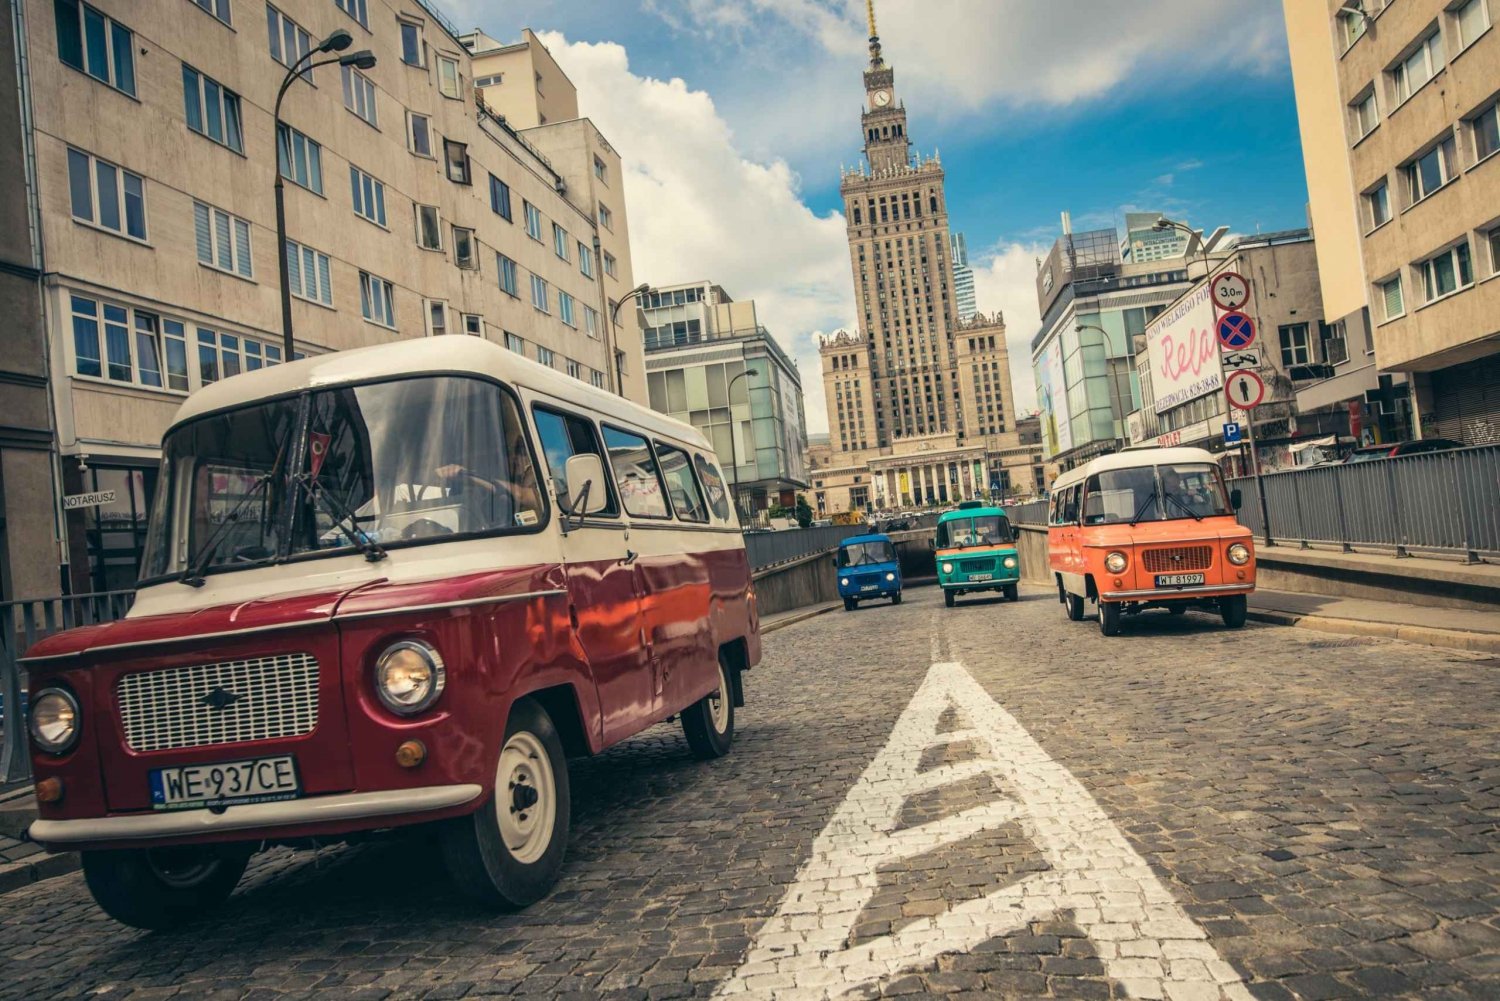 Warsaw: Communism Tour in an Original Socialist Van